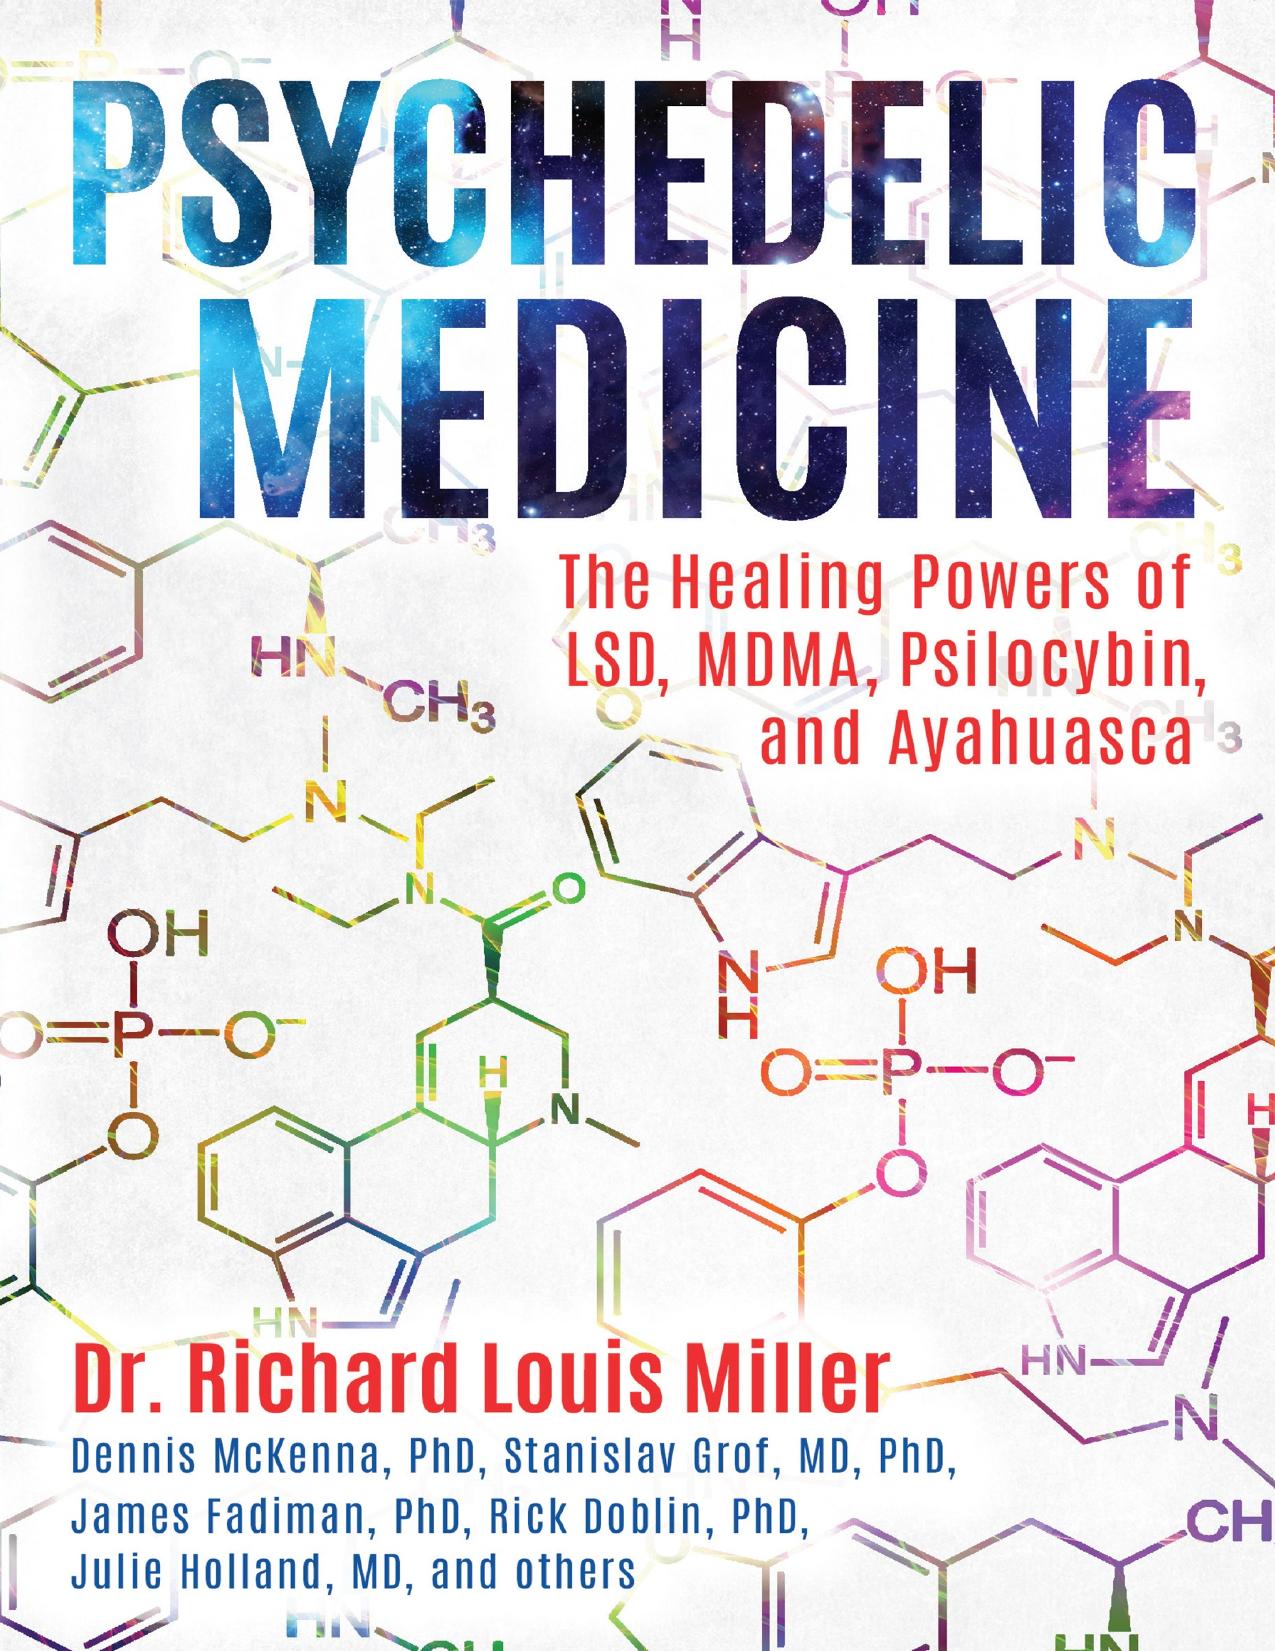 Psychedelic Medicine: The Healing Powers of LSD, MDMA, Psilocybin, and Ayahuasca - PDFDrive.com